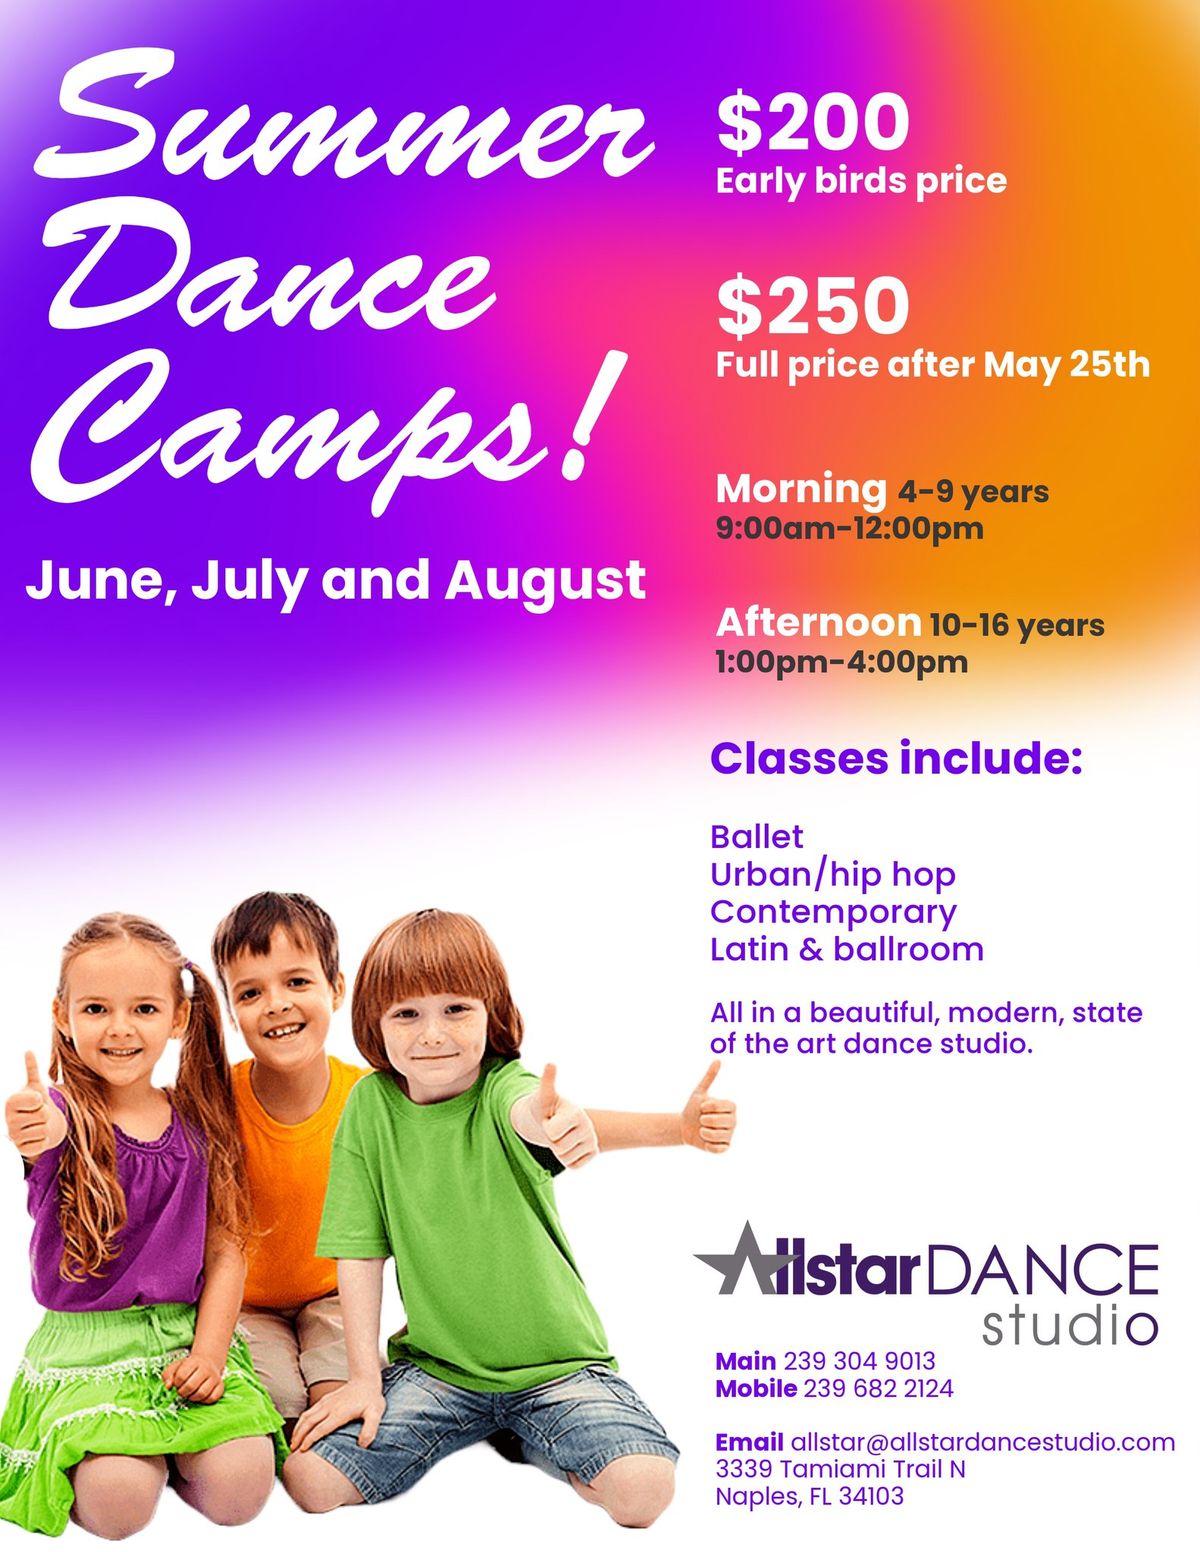 Summer Dance Camps!